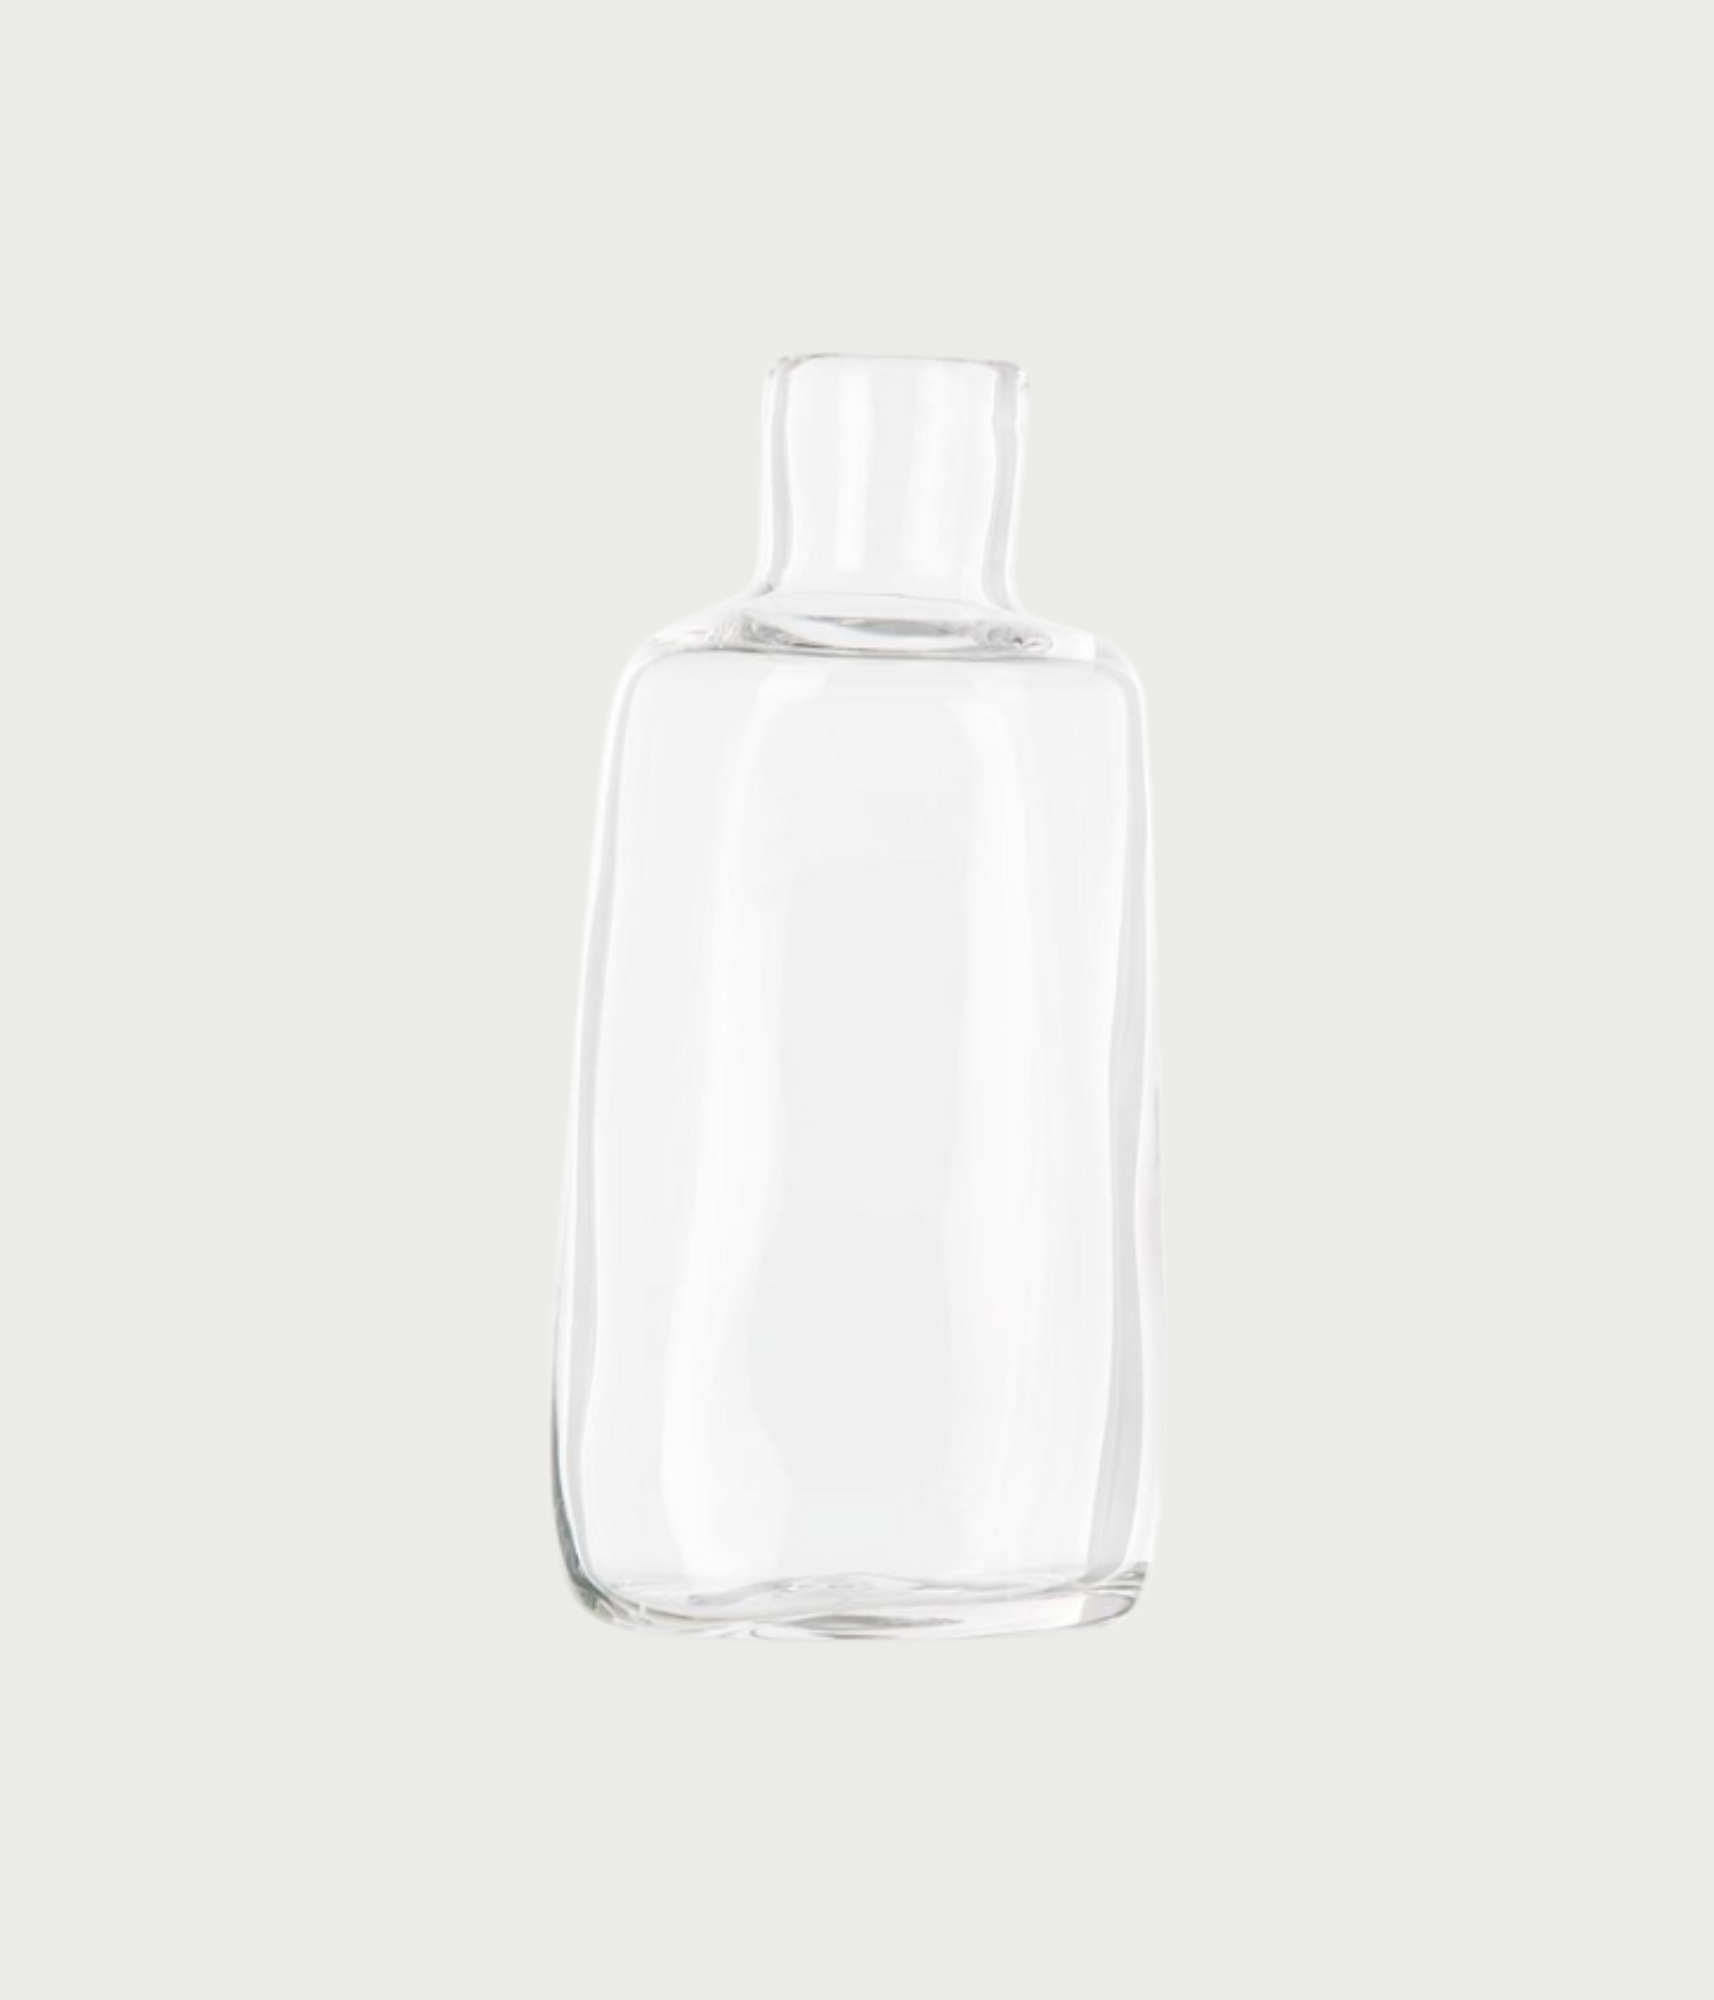 0405 Wide Glass Bottle images